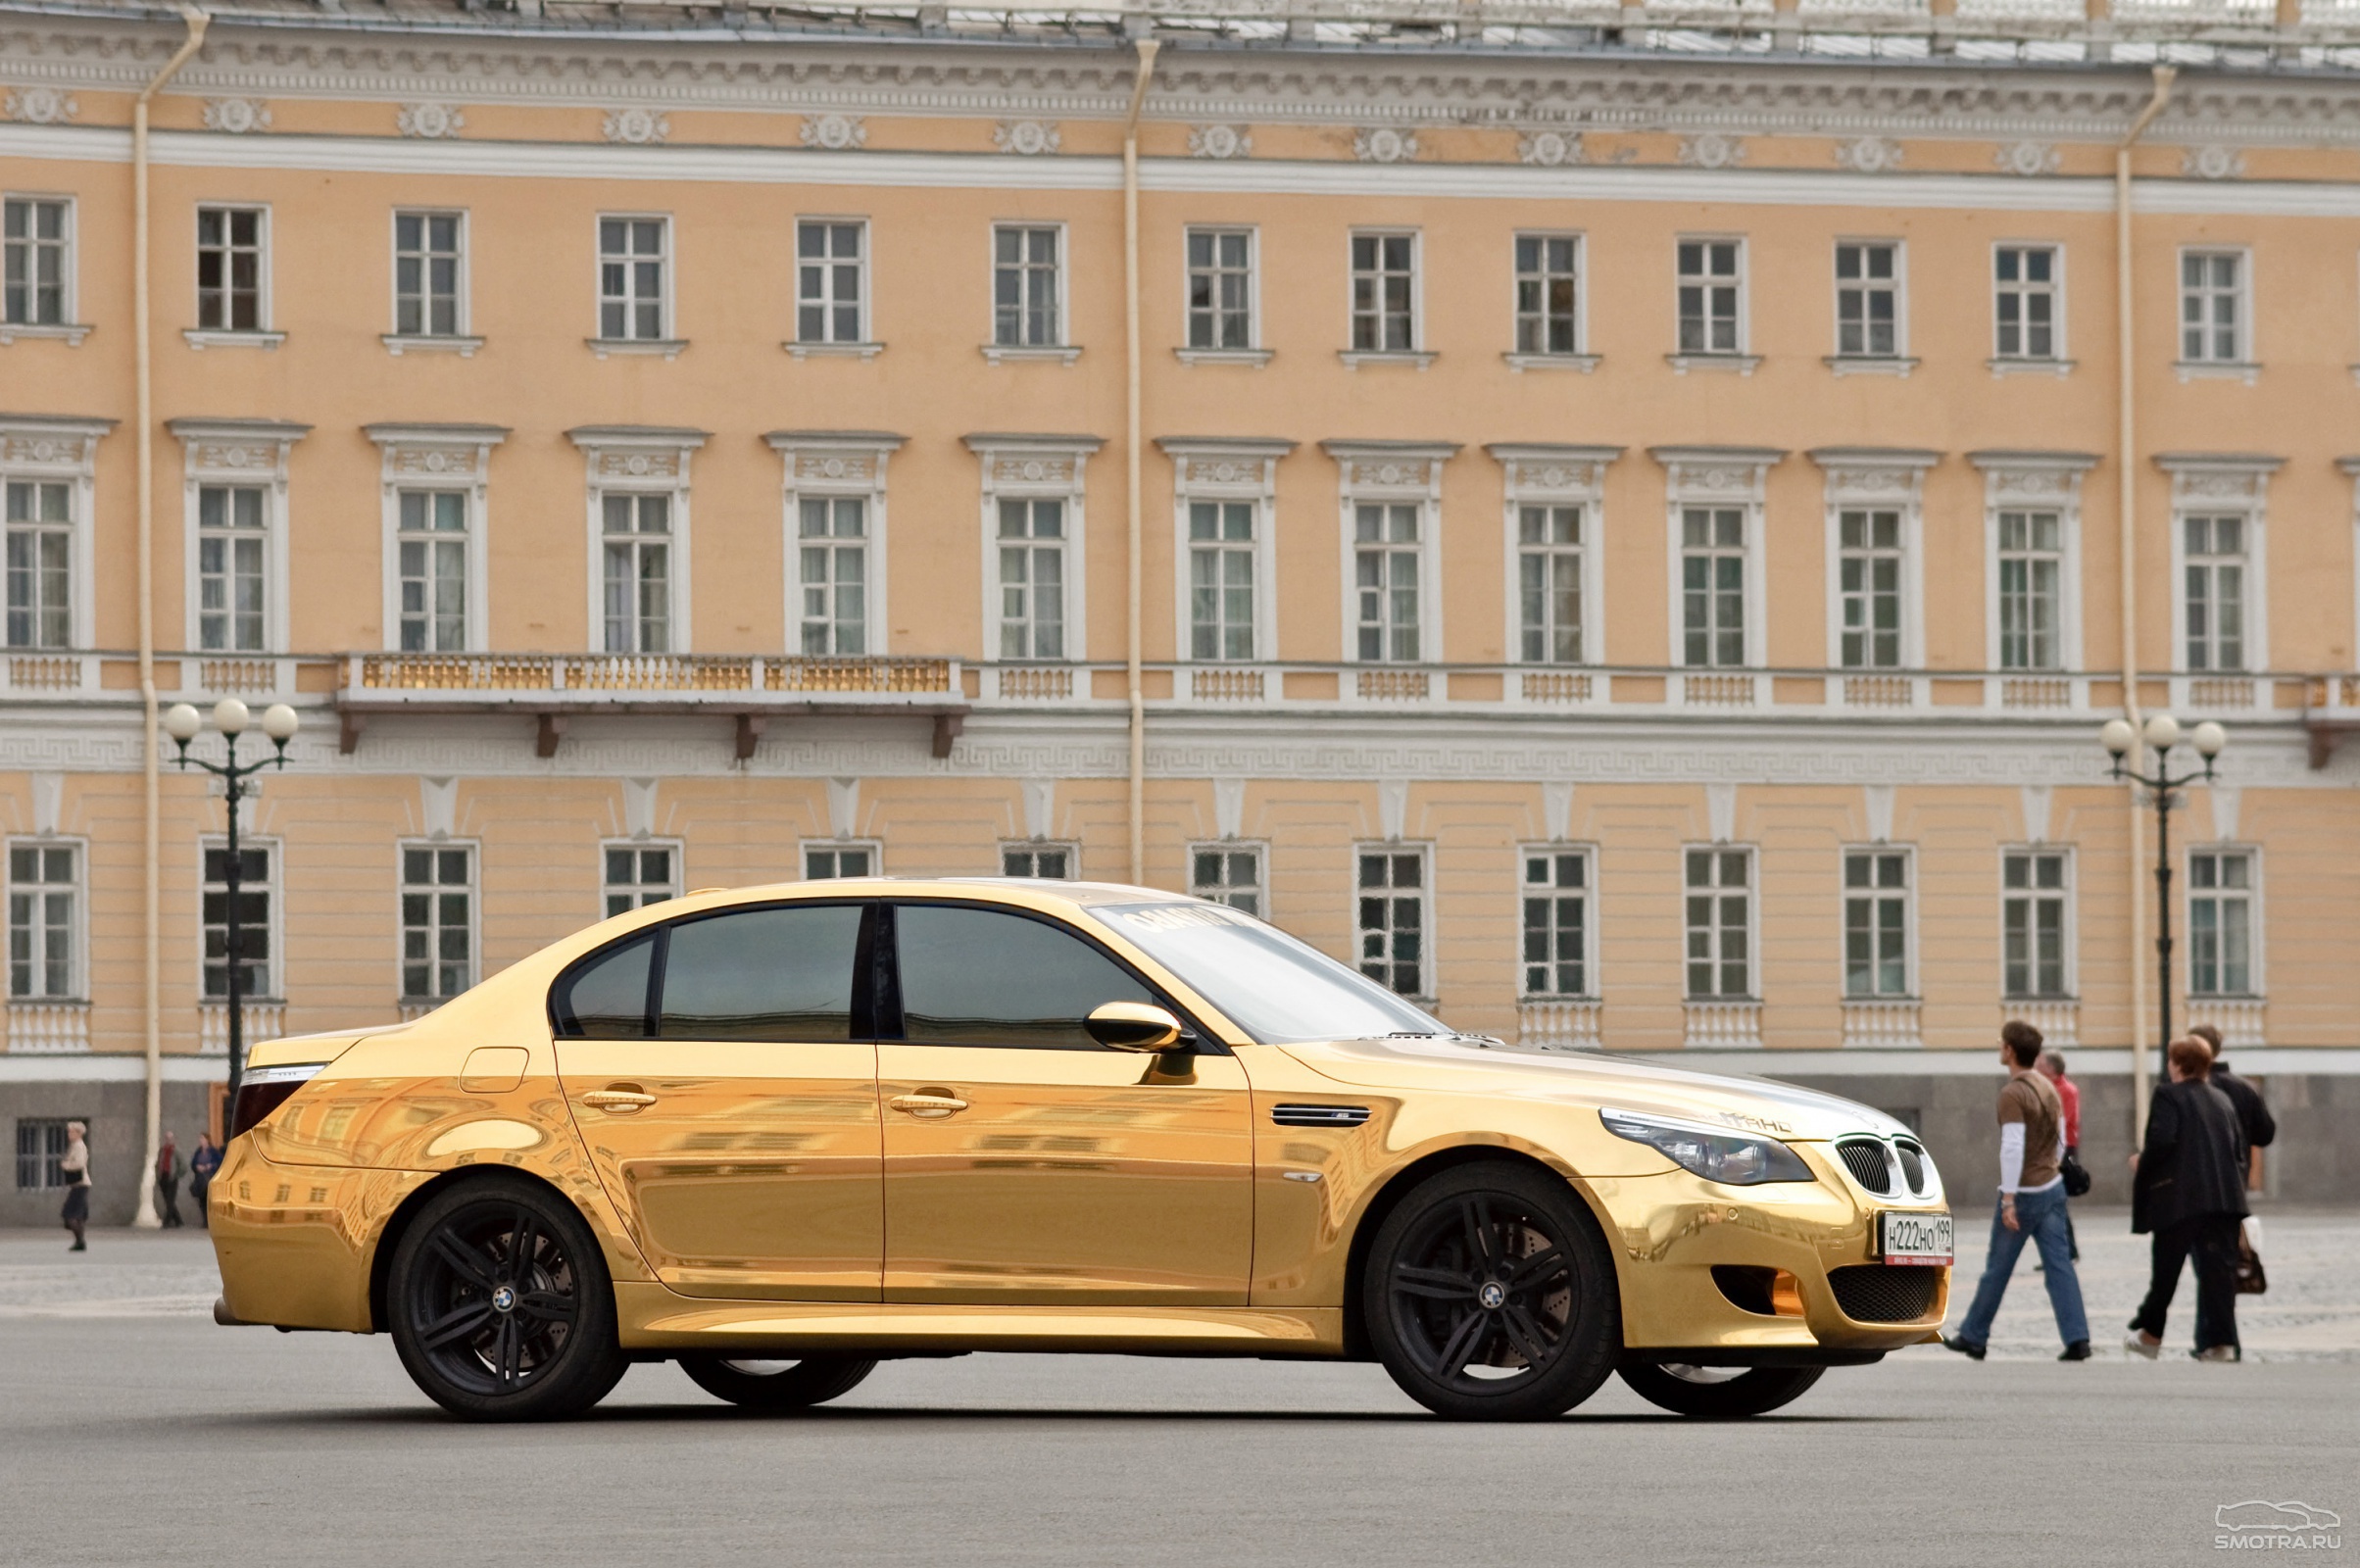 A5 gold. BMW m5 Gold. BMW m5 золотистый. BMW m5 Давидыча. BMW m5 e60 Золотая.